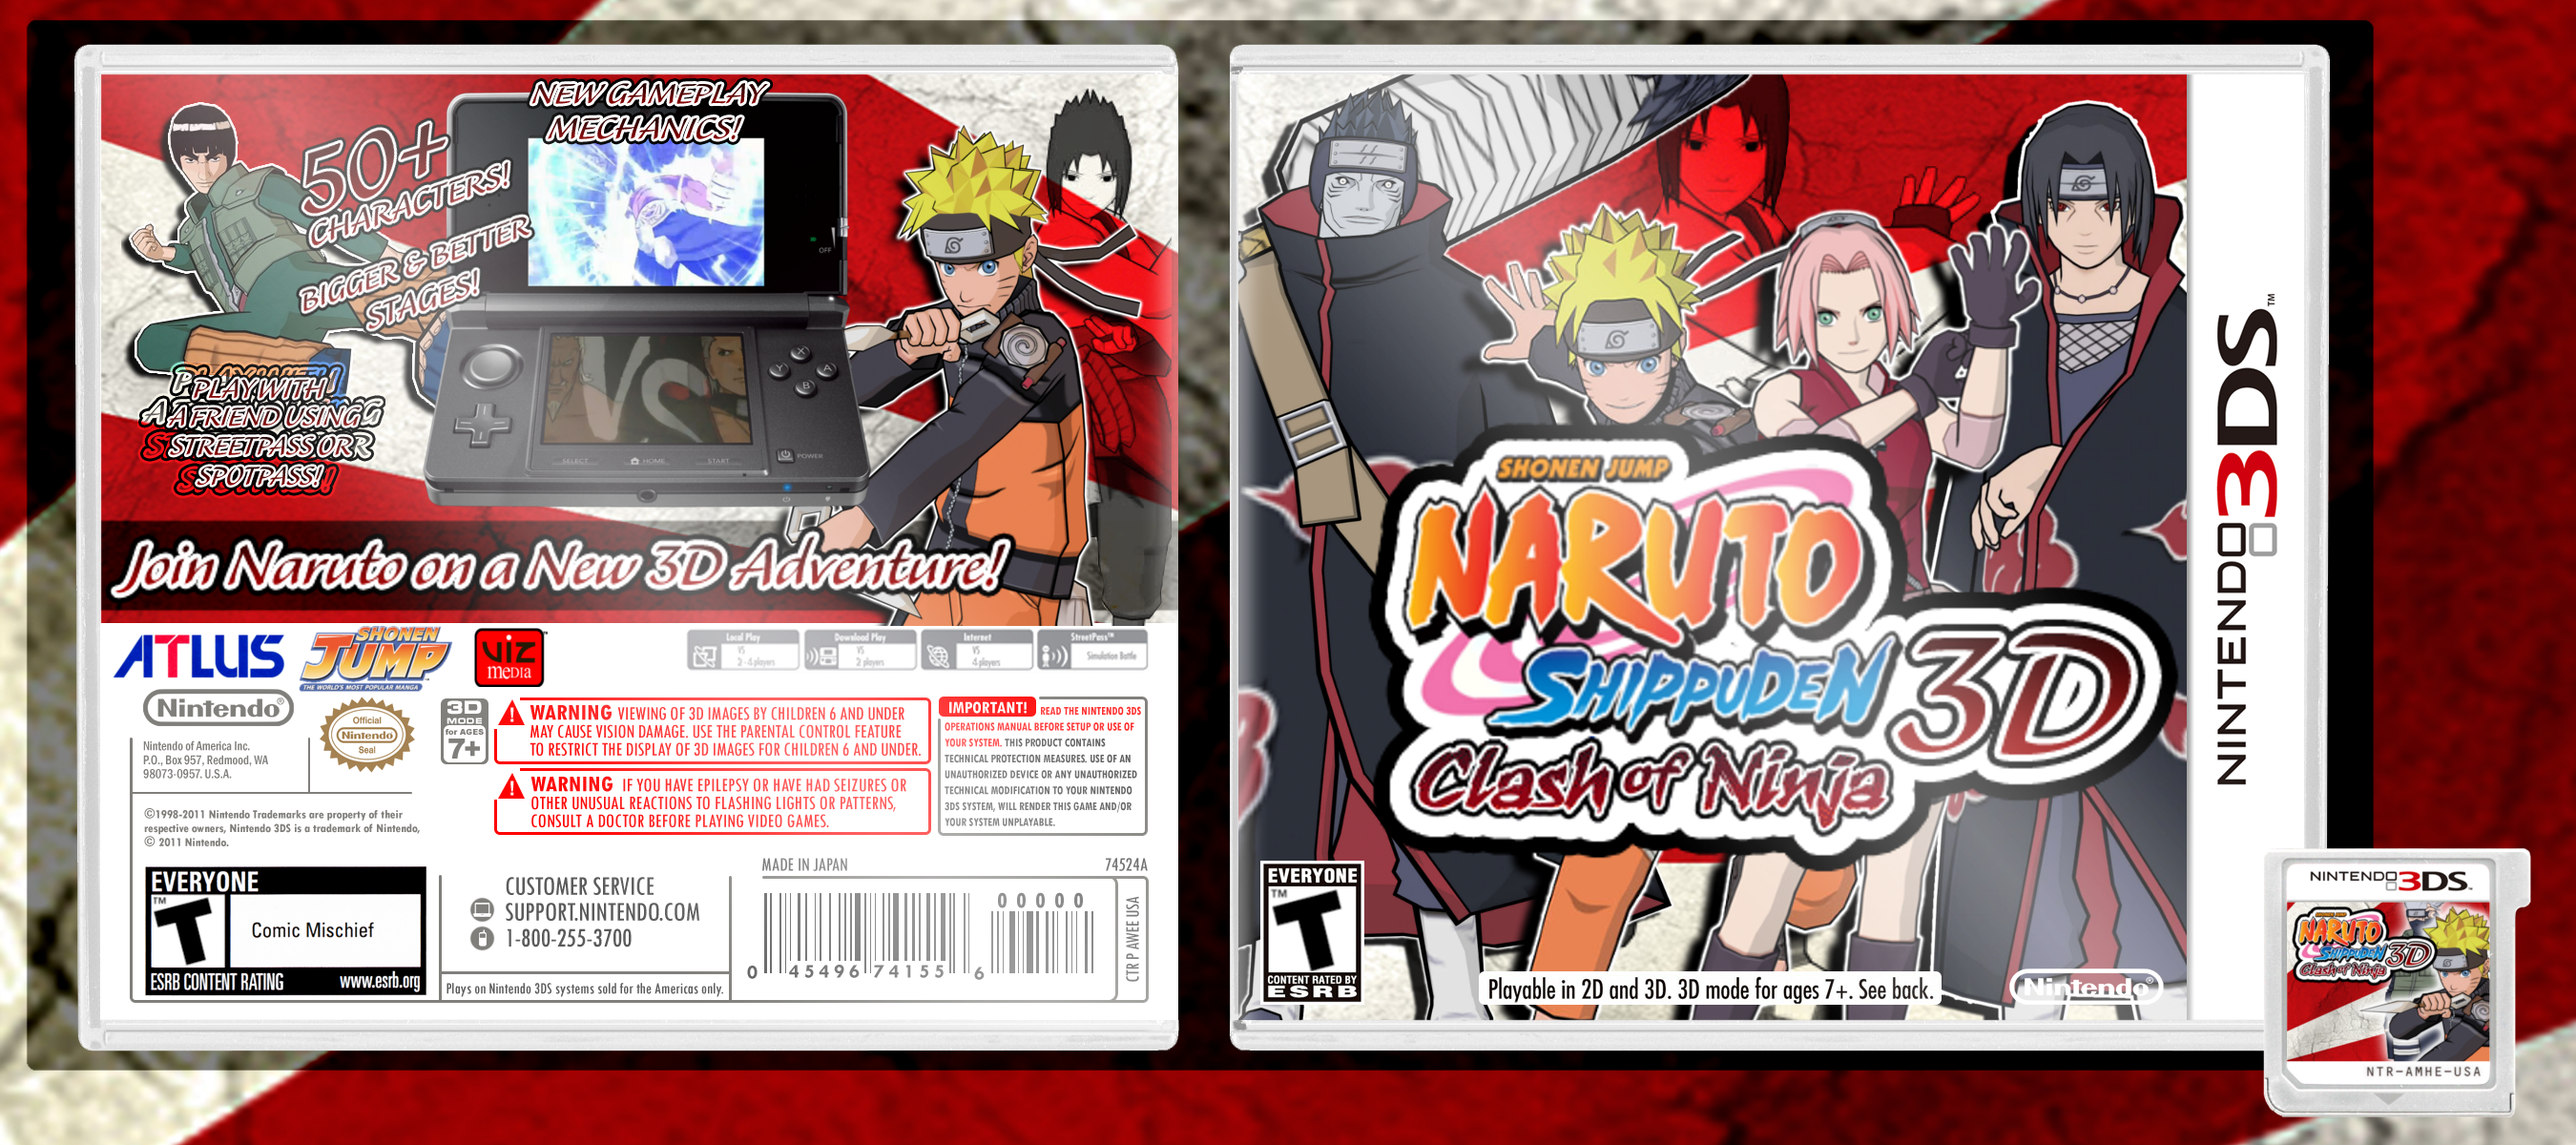 Naruto Shippuden: Clash of Ninja 3D box cover